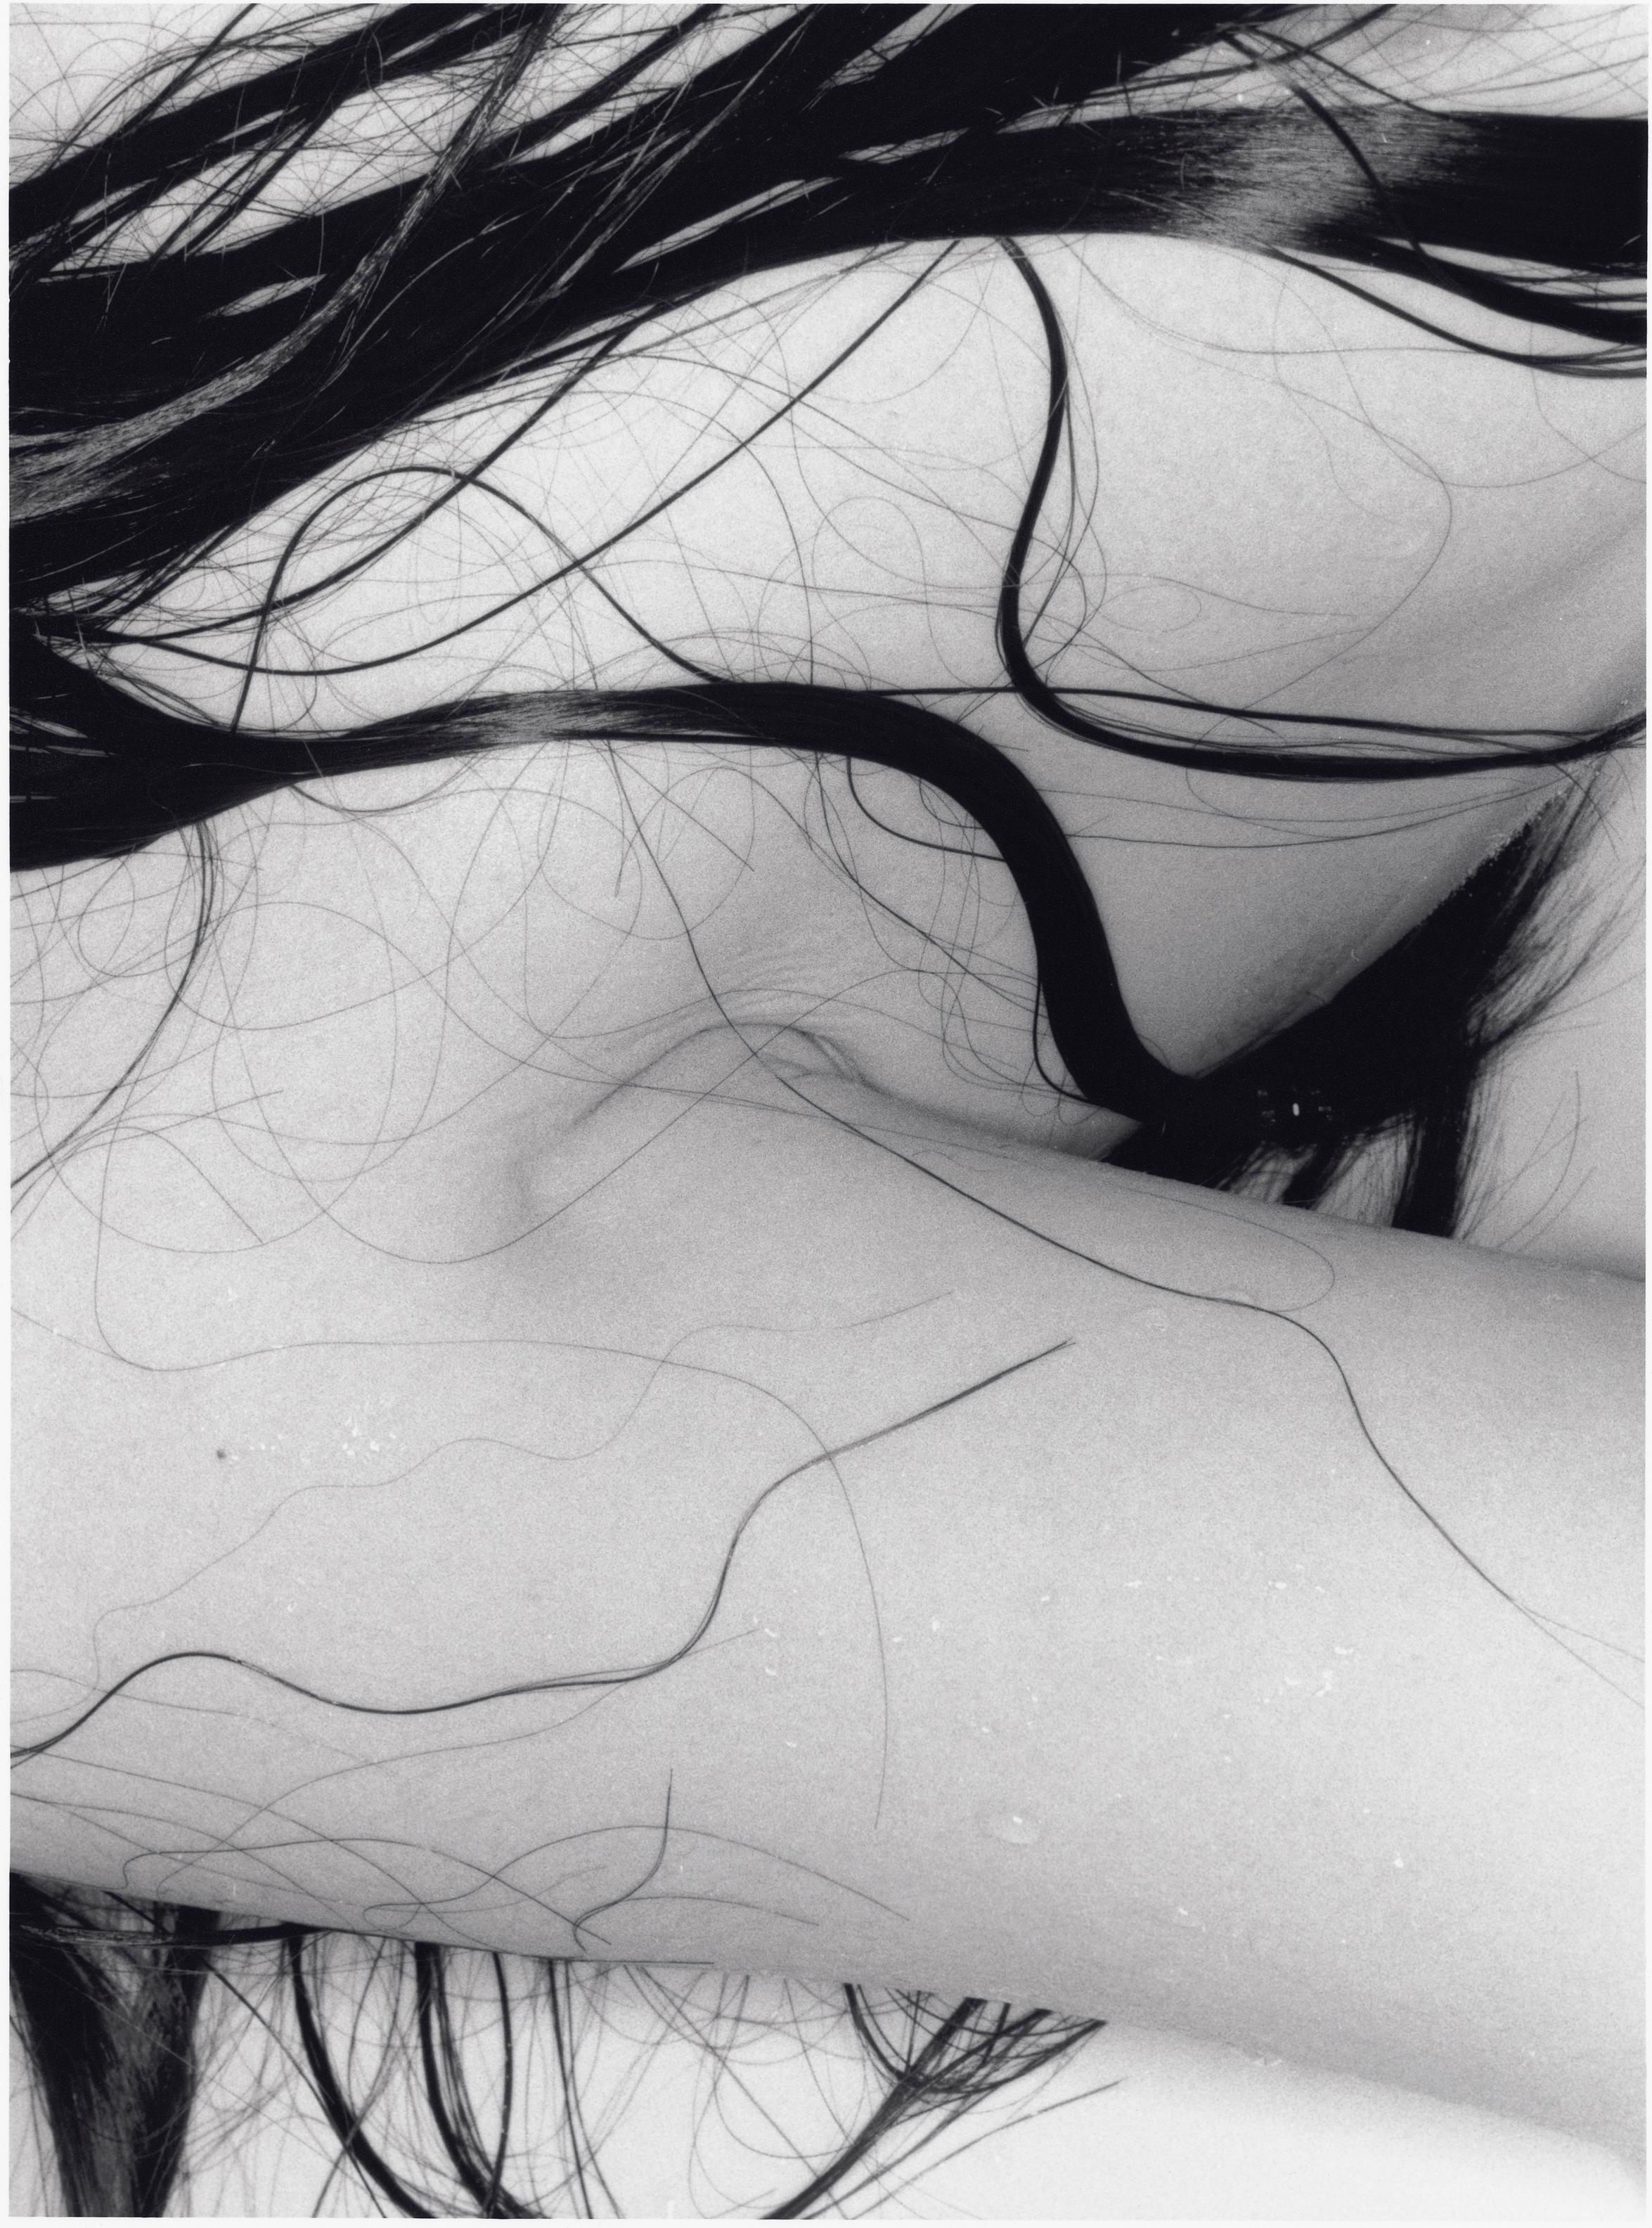 Nobuyoshi ARAKI (*1940, Japan)
Ohne Titel (Erotos), 1993
Gelatinesilberdruck
Blatt 101,6 x 76,2 cm (40 x 30 in.)
Nur drucken

- Nobuyoshi Araki
Nobuyoshi Araki (Tokio, 1940) ist ein in Tokio lebender Fotograf. Araki schloss sein Studium an der